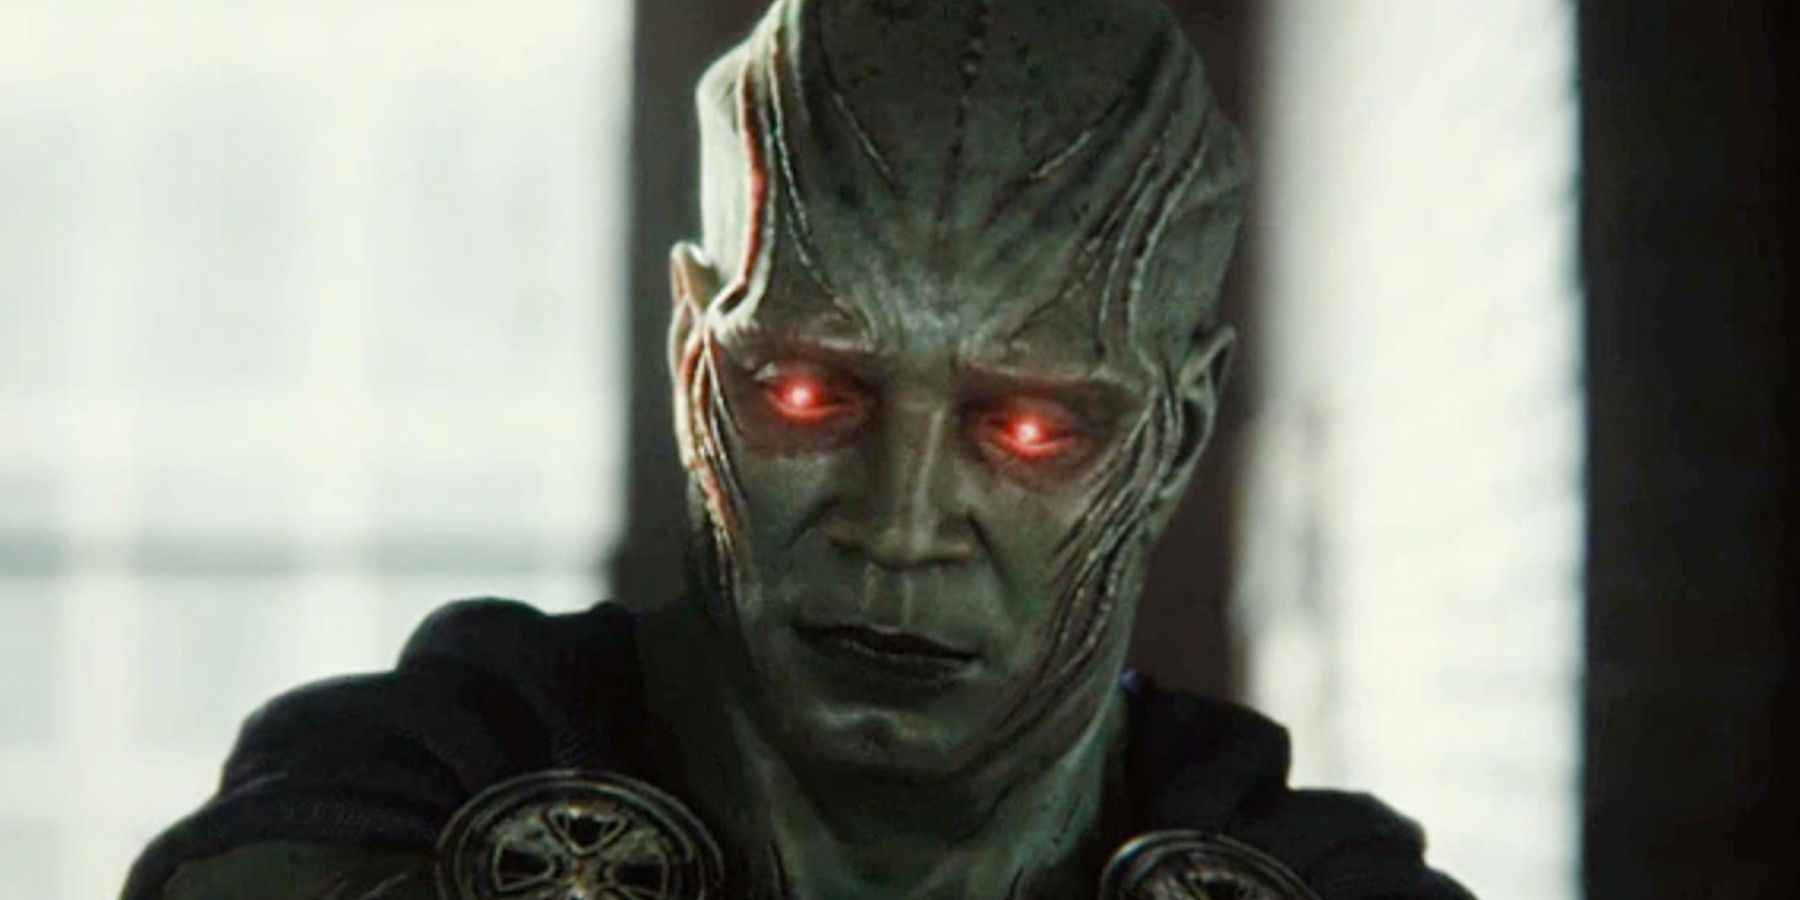 Martian Manhunter reveals himself in Zack Snyder's Justice League